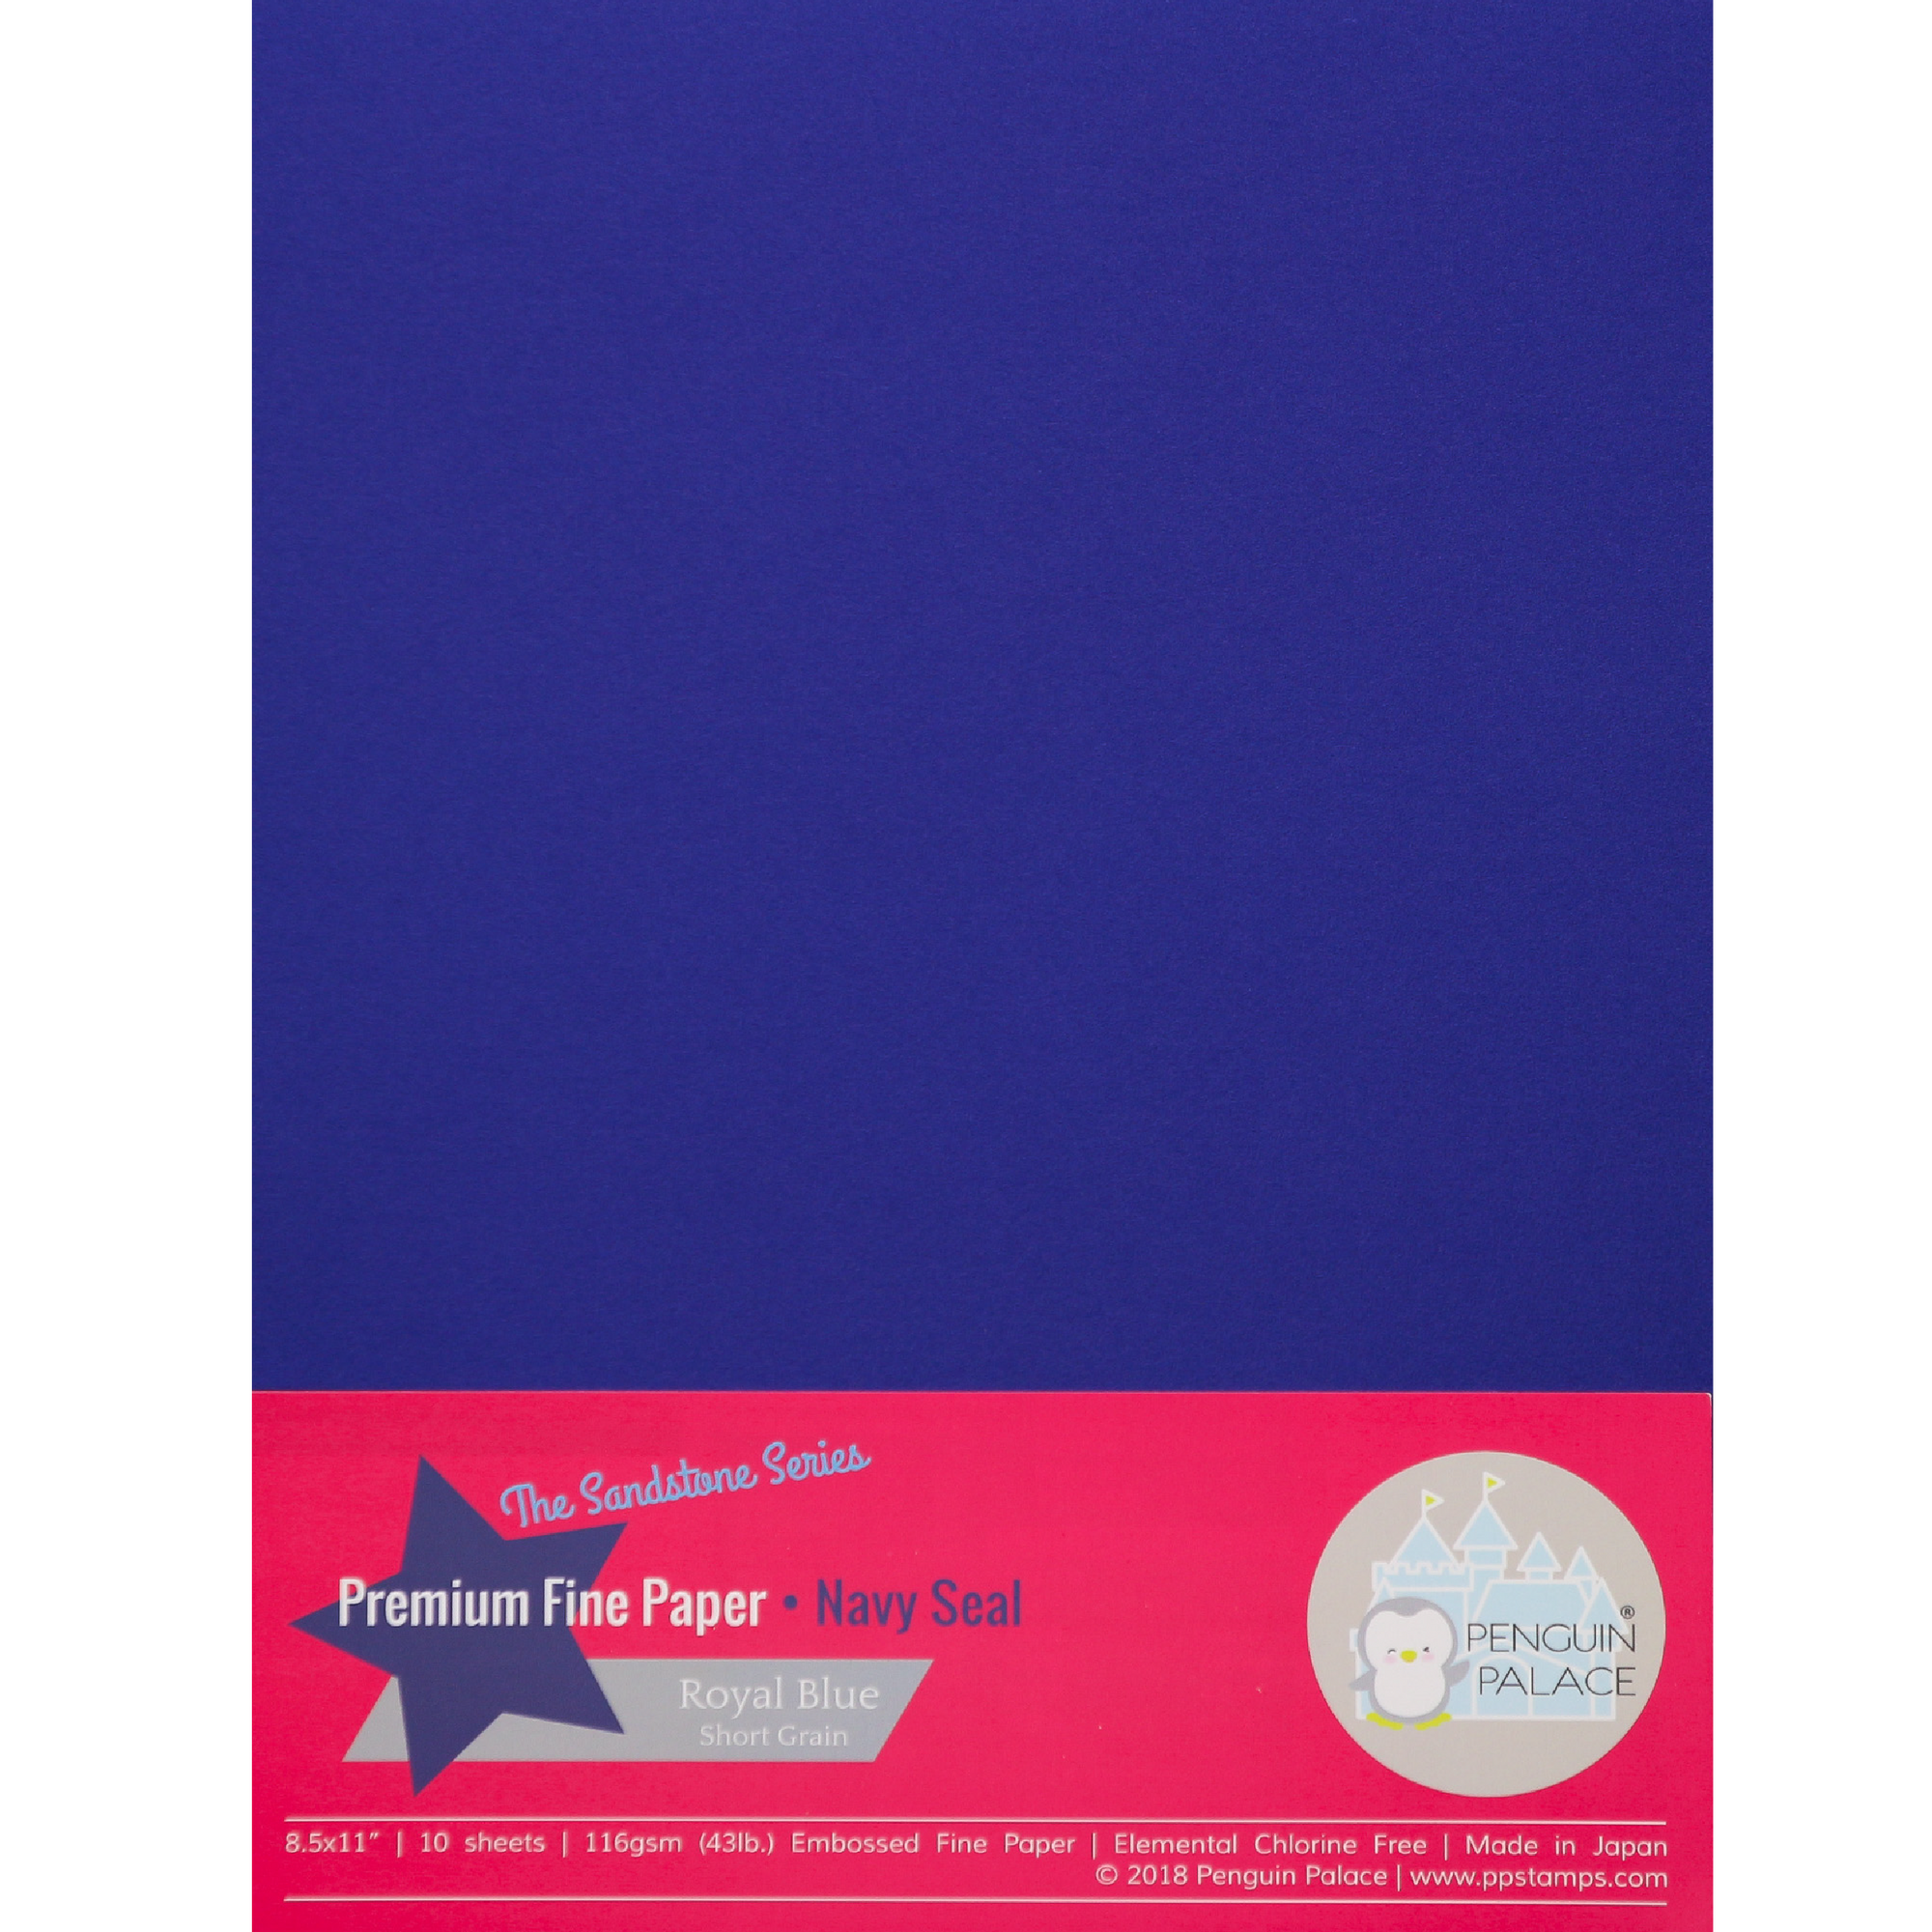 The Sandstone Series - Navy Seal - Premium Fine Paper